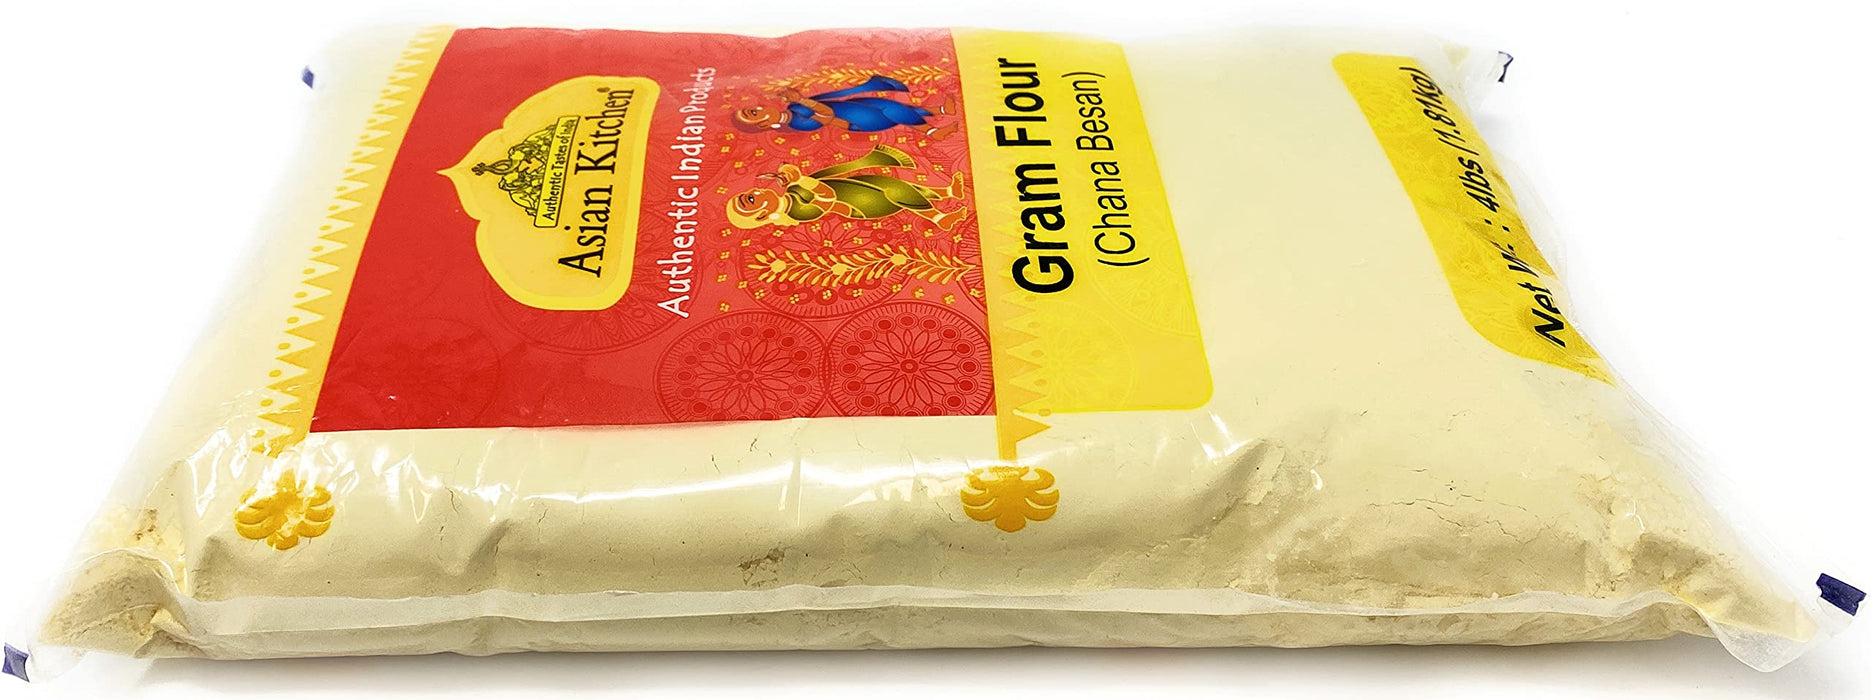 Asian Kitchen Chana Besan - Chickpeas Flour, Gram 4lb (64oz) ~ All Natural | Vegan | Gluten Friendly | NON-GMO | Indian Origin